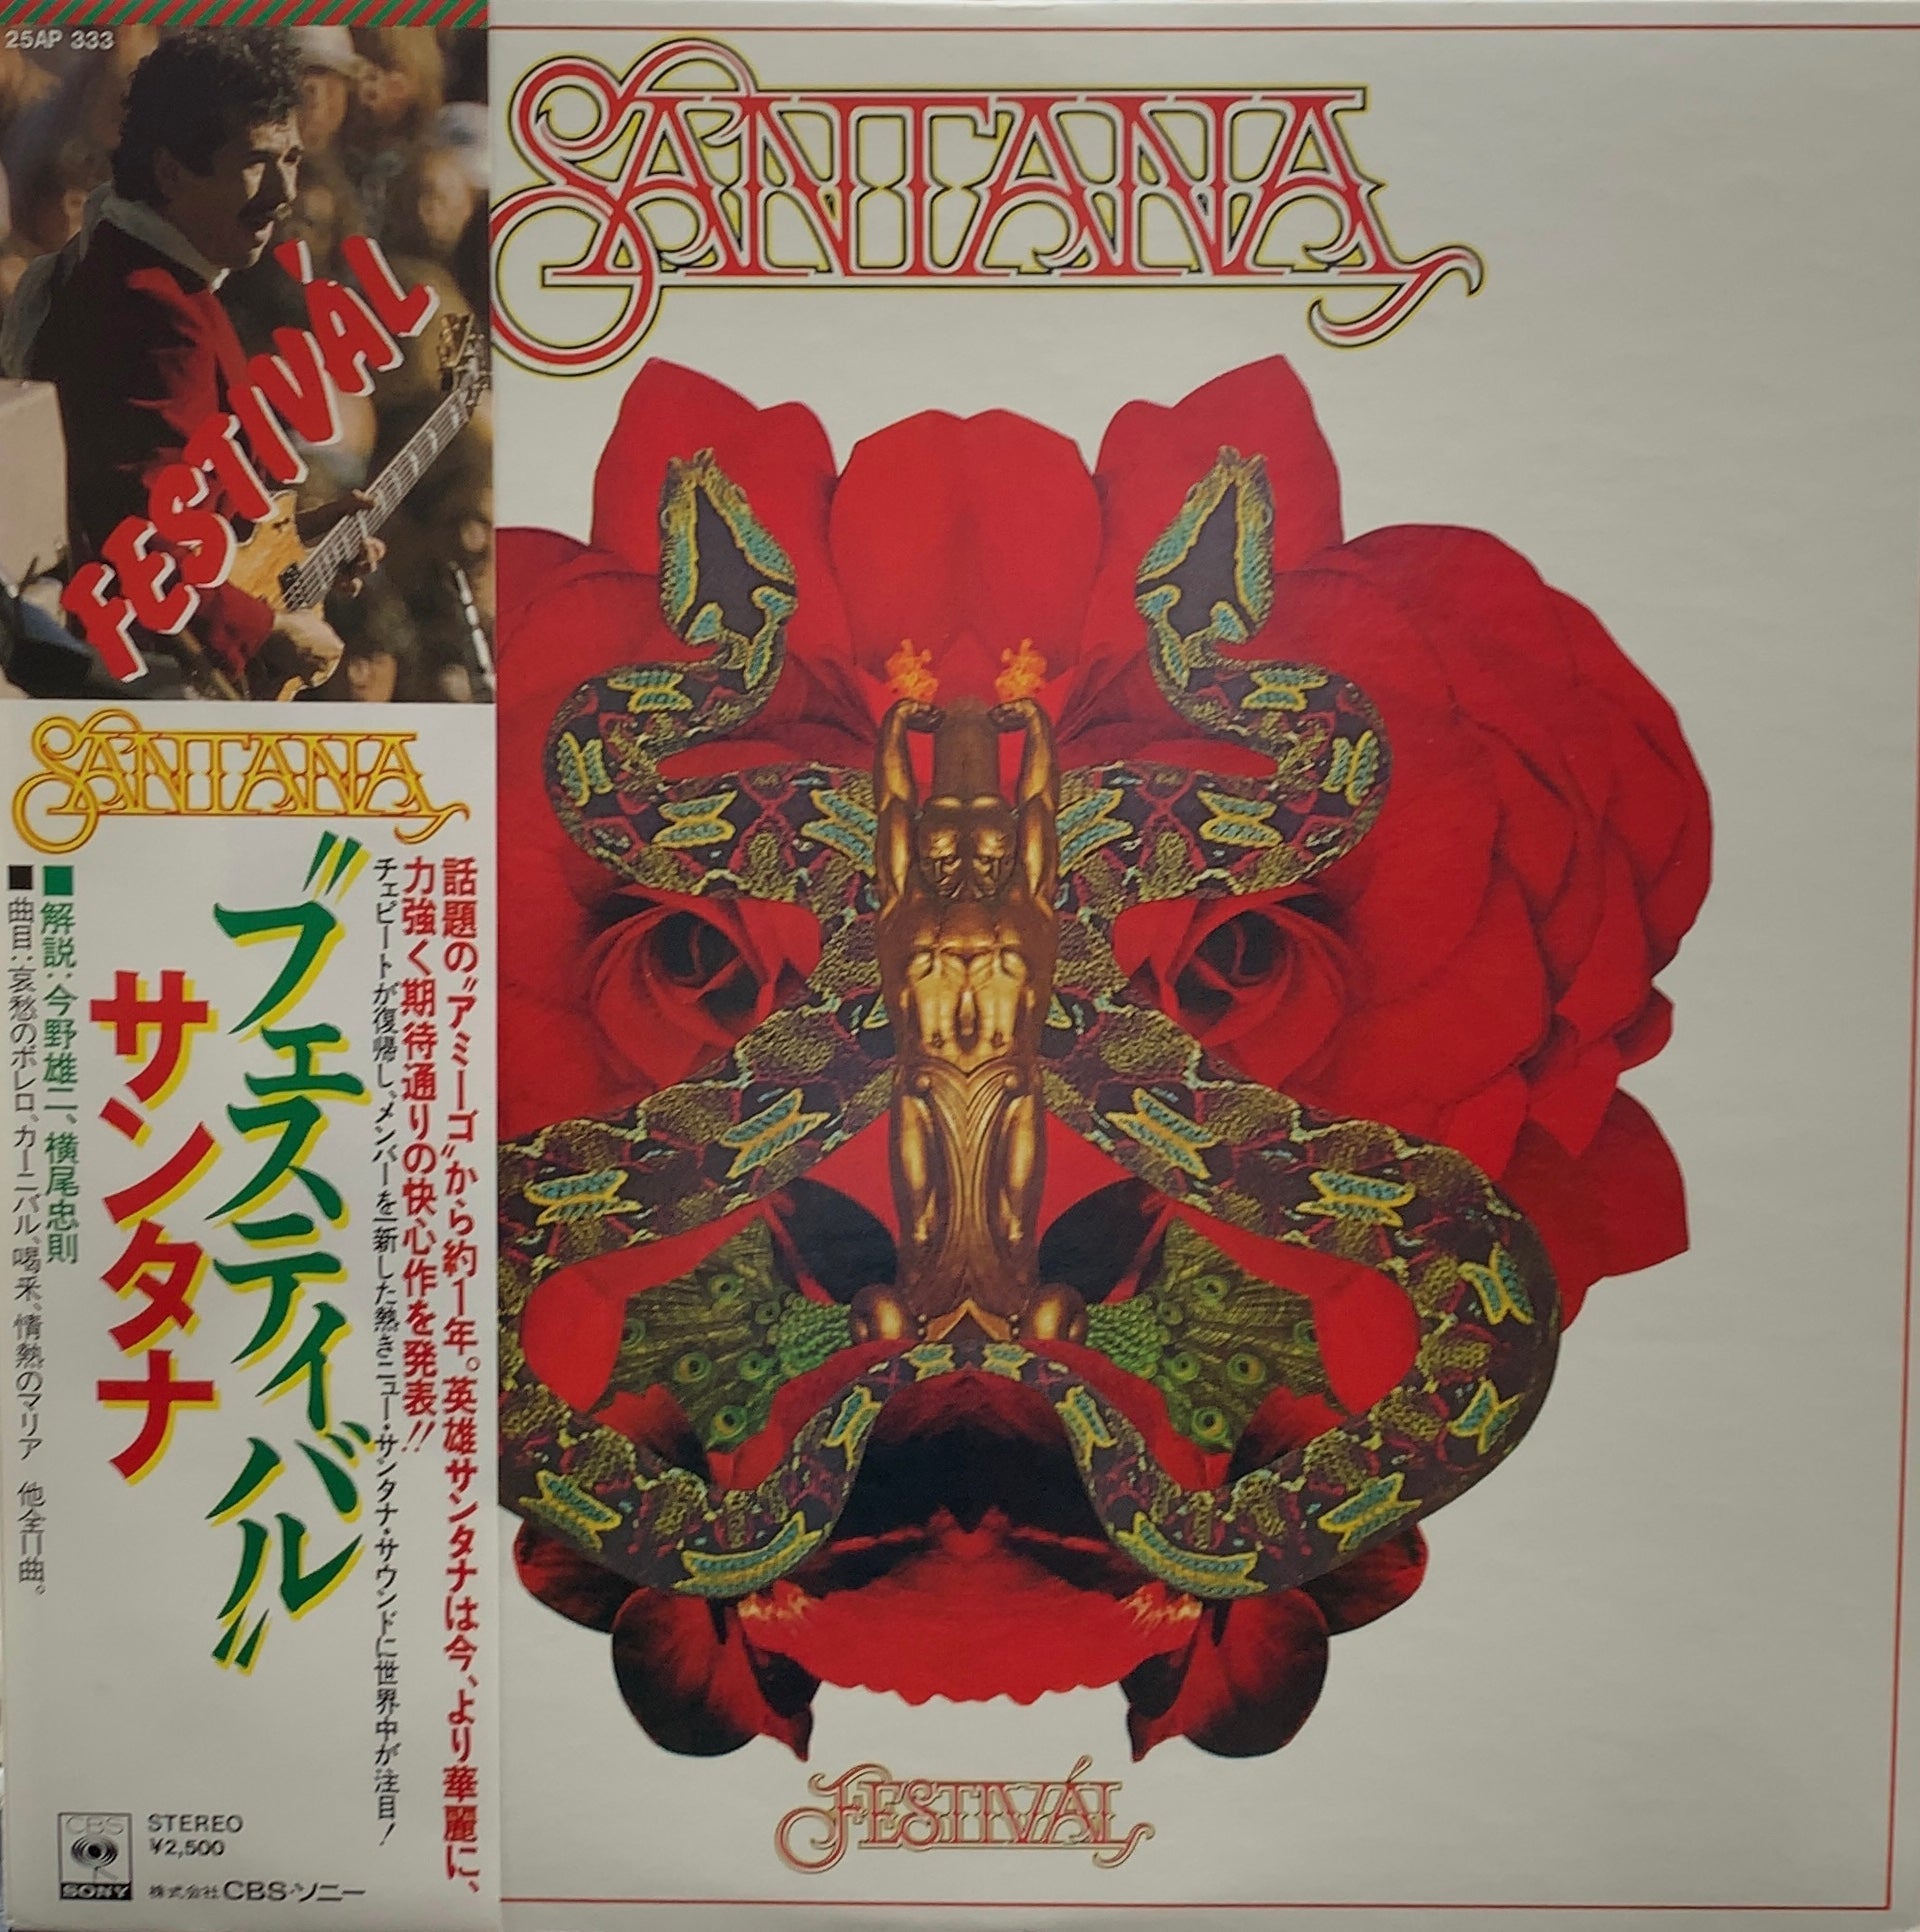 SANTANA / Festival (CBS/Sony – 25AP 333